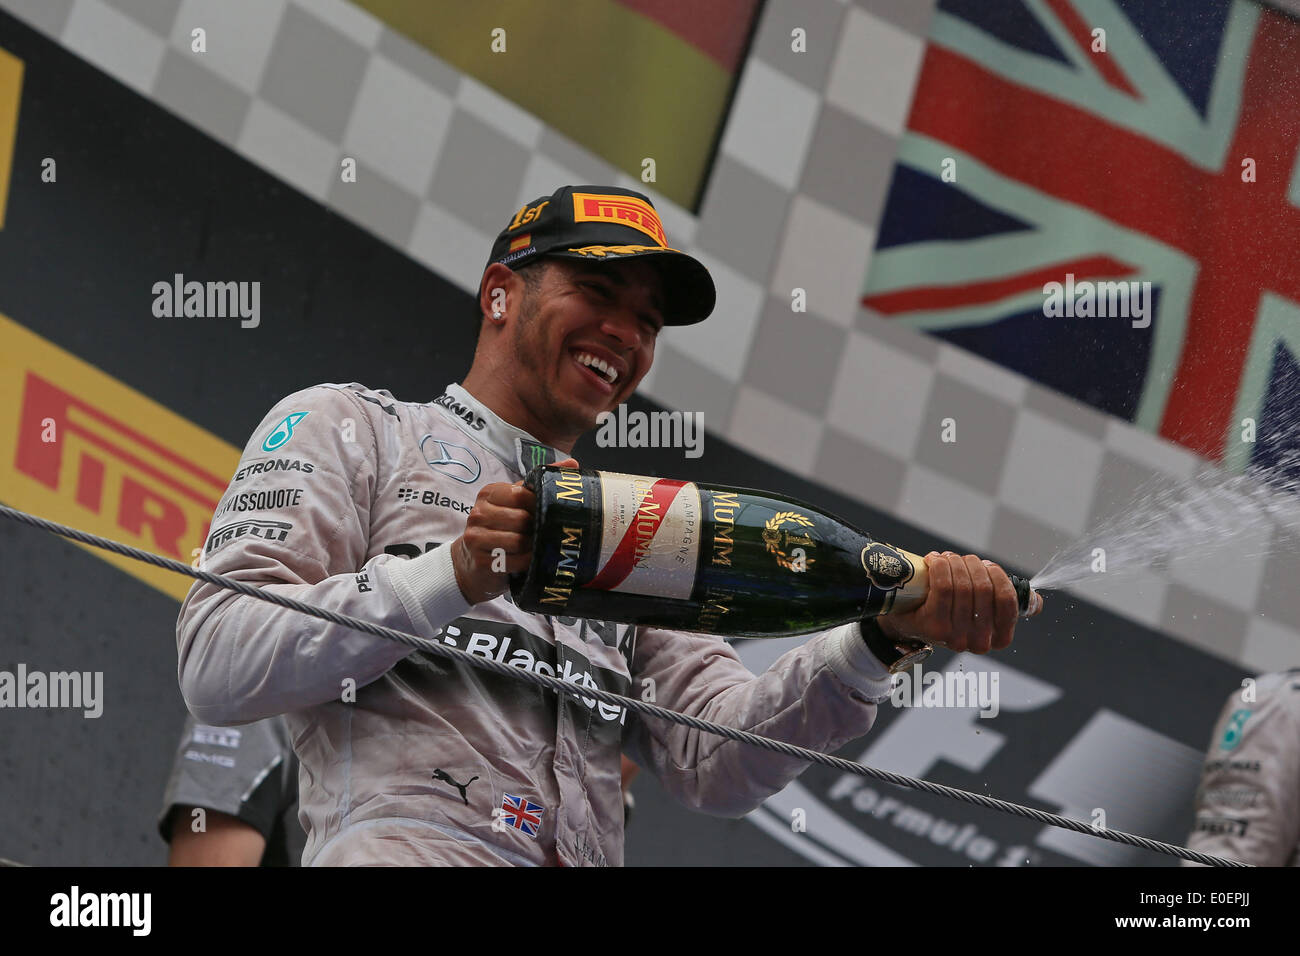 Circuit de Barcelona-Catalunya, Barcelona, Spanien. 11. Mai 2014. Spanische Formel 1 Grand Prix. Lewis Hamilton nimmt 1. Platz auf dem Podium Credit: Action Plus Sport/Alamy Live News Stockfoto